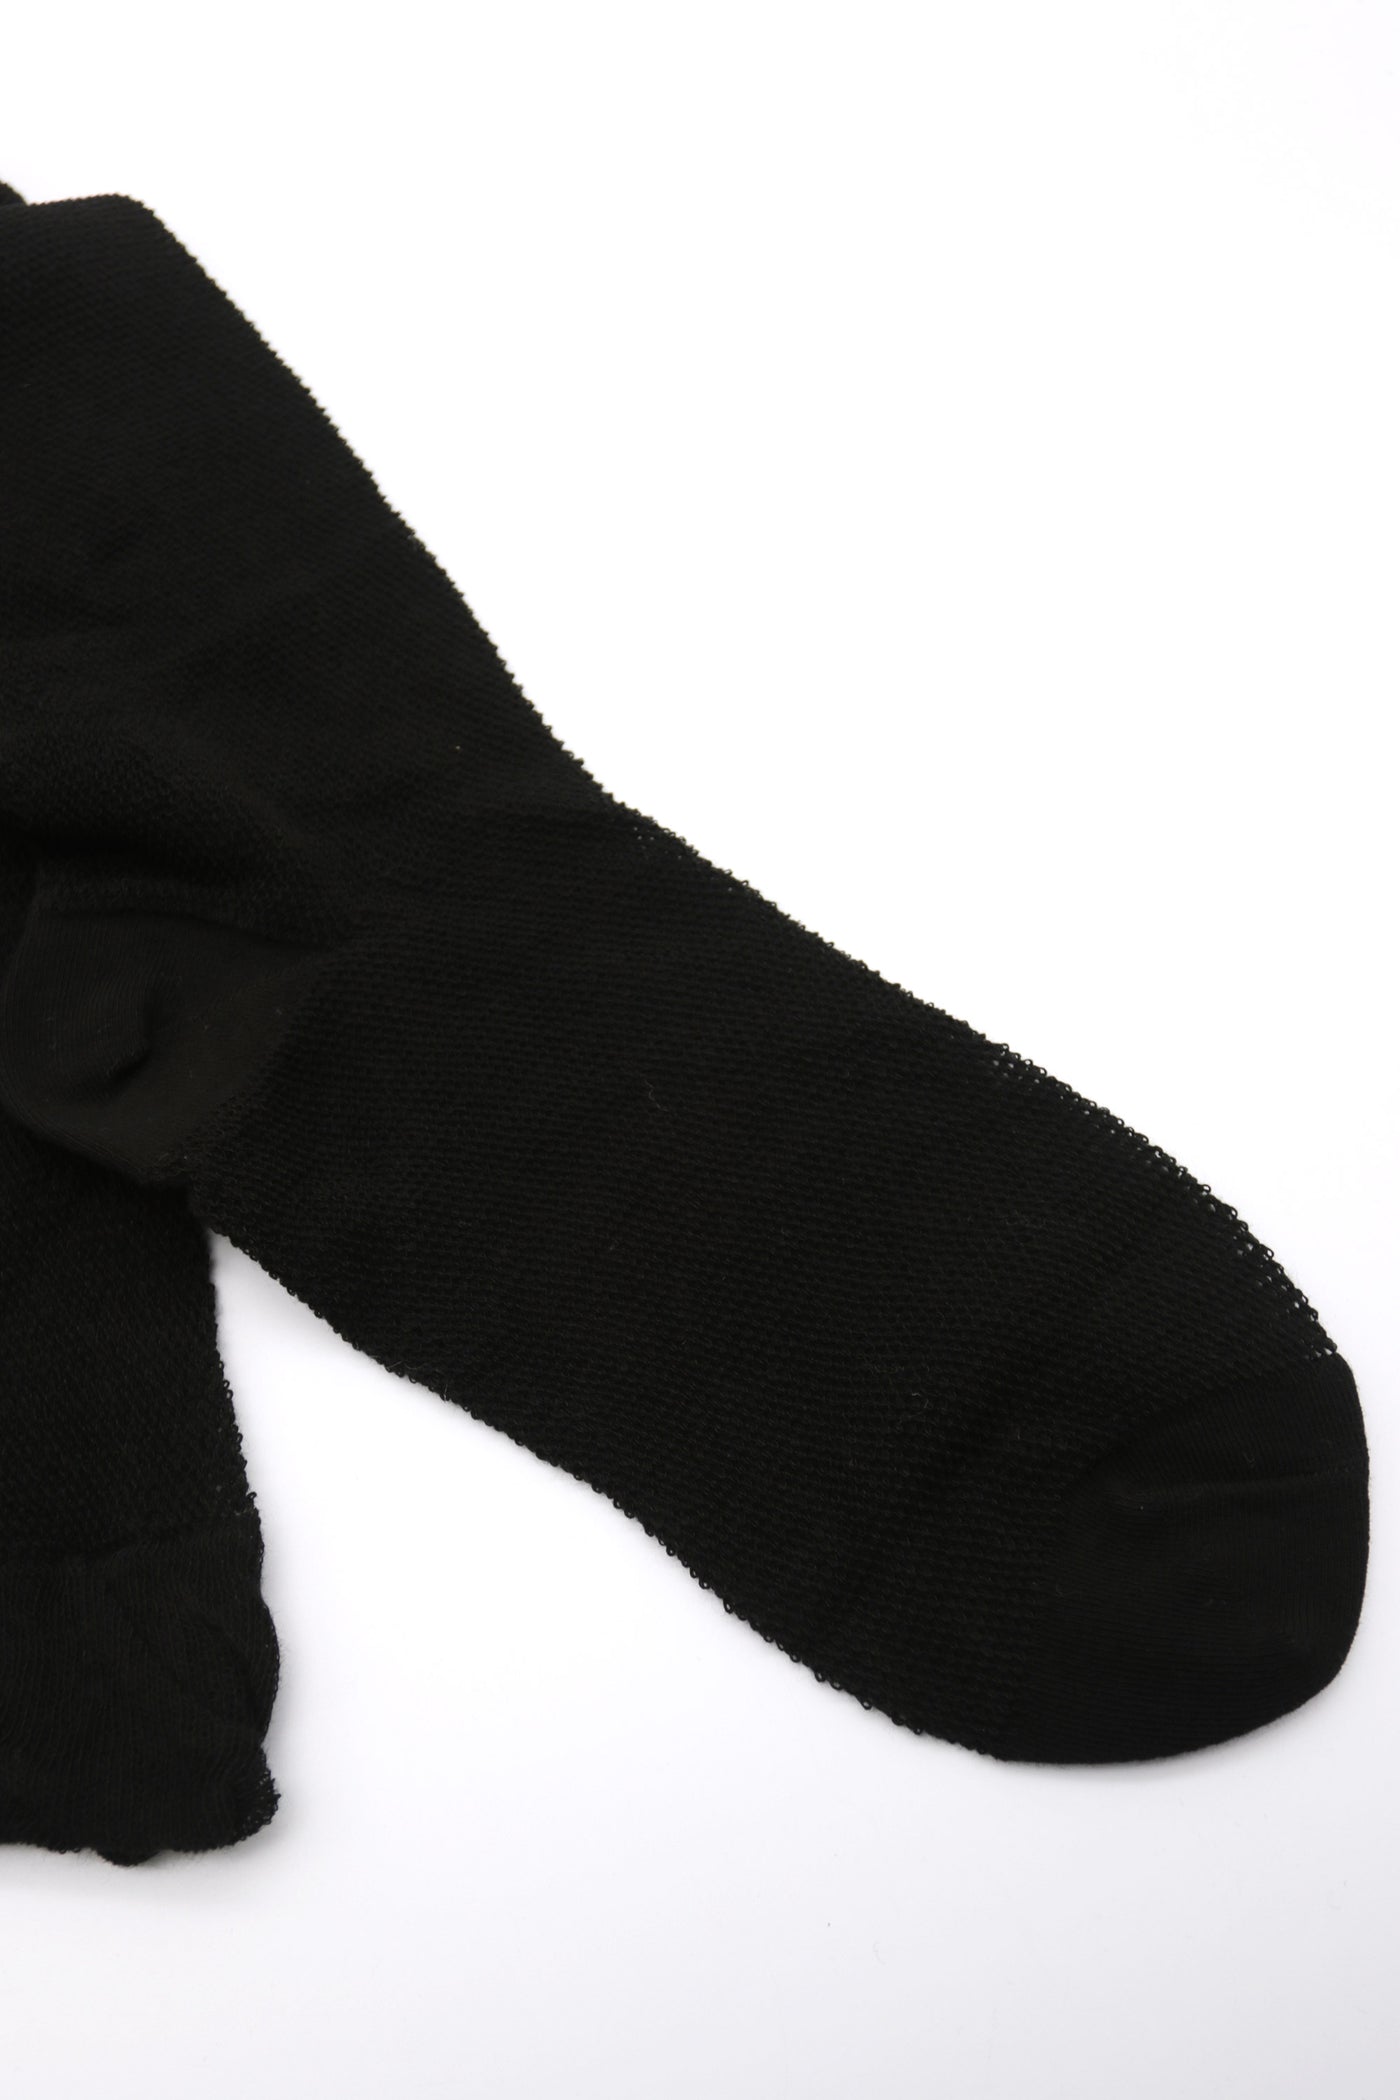 storets.com Knee-high Sheer Socks